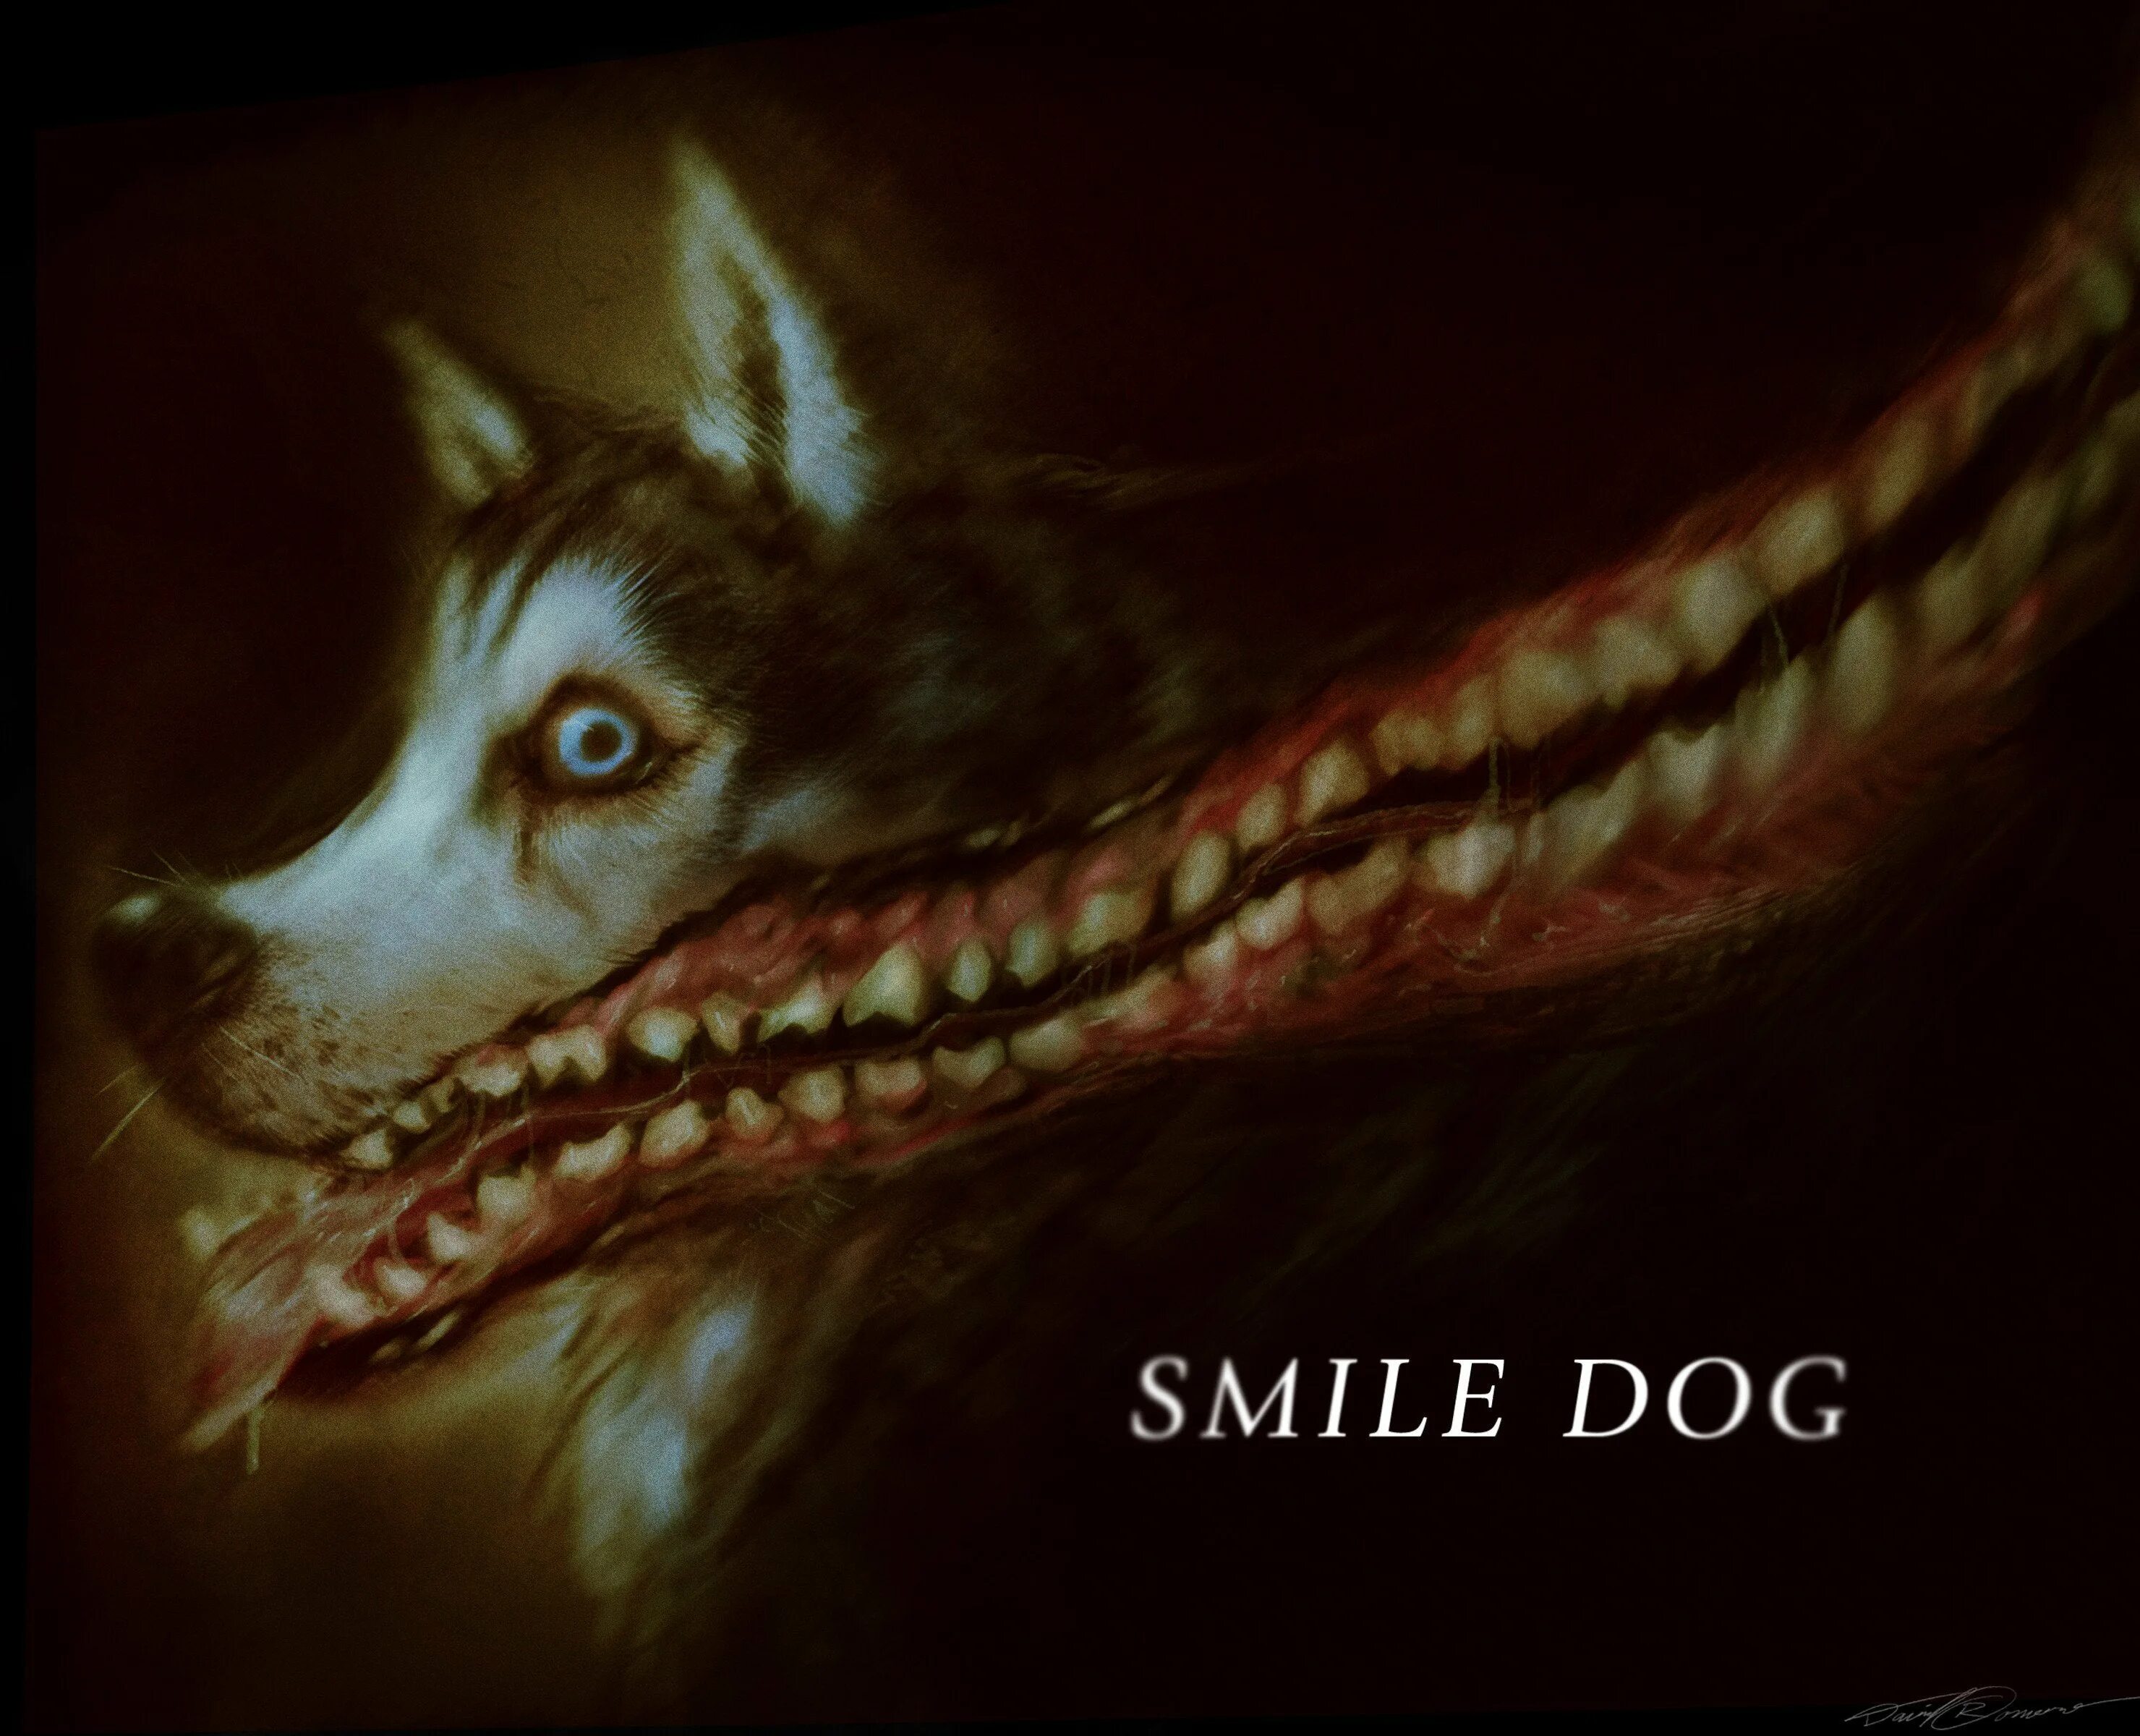 Собака улыбака крипипаста. Крипипаста улыбающийся пес дог.